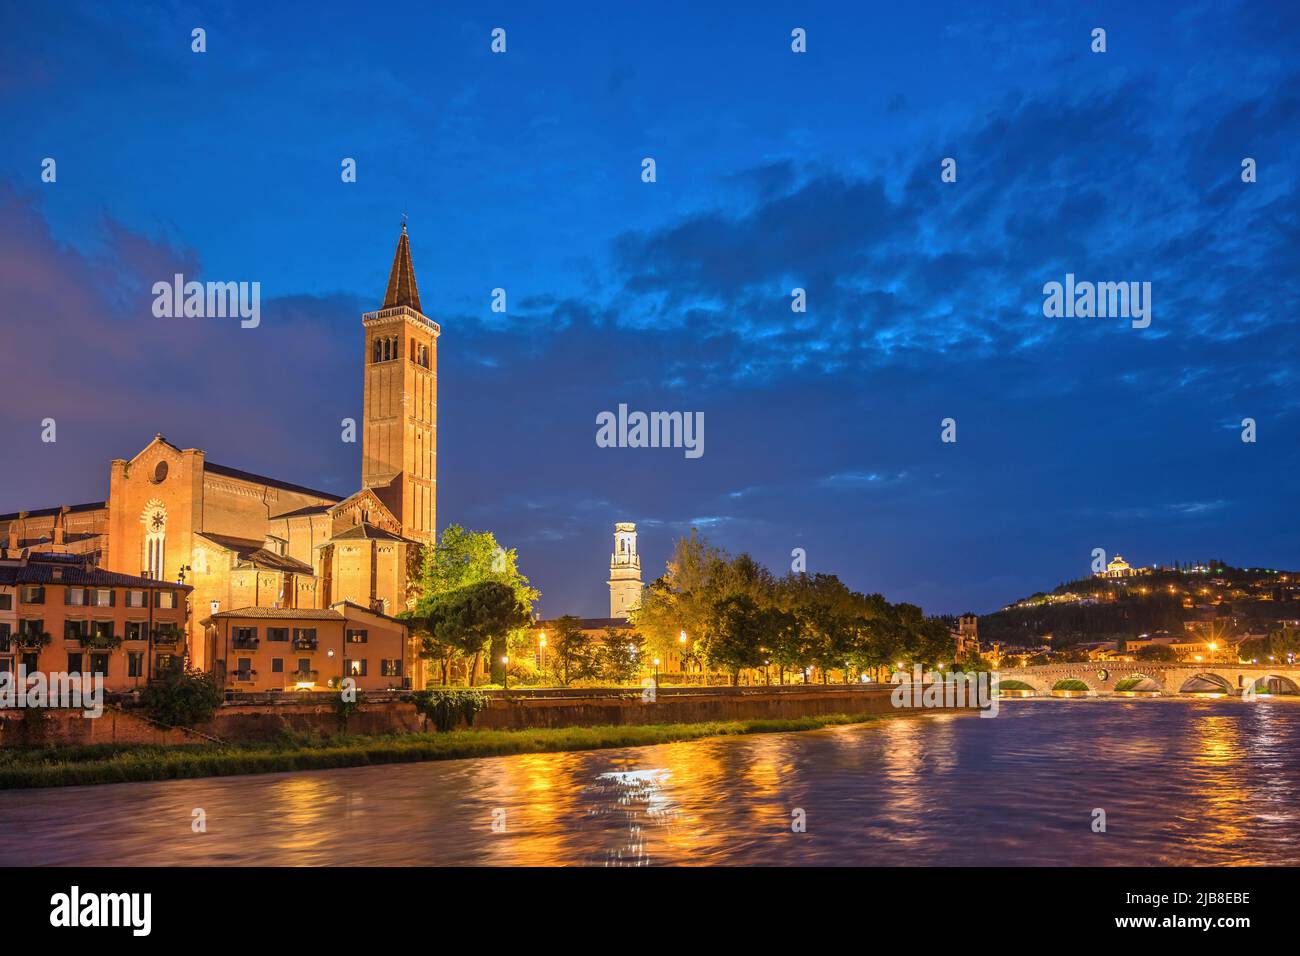 Verona Italy, night city skyline at Adige river and Basilica di Santa Anastasia Stock Photo